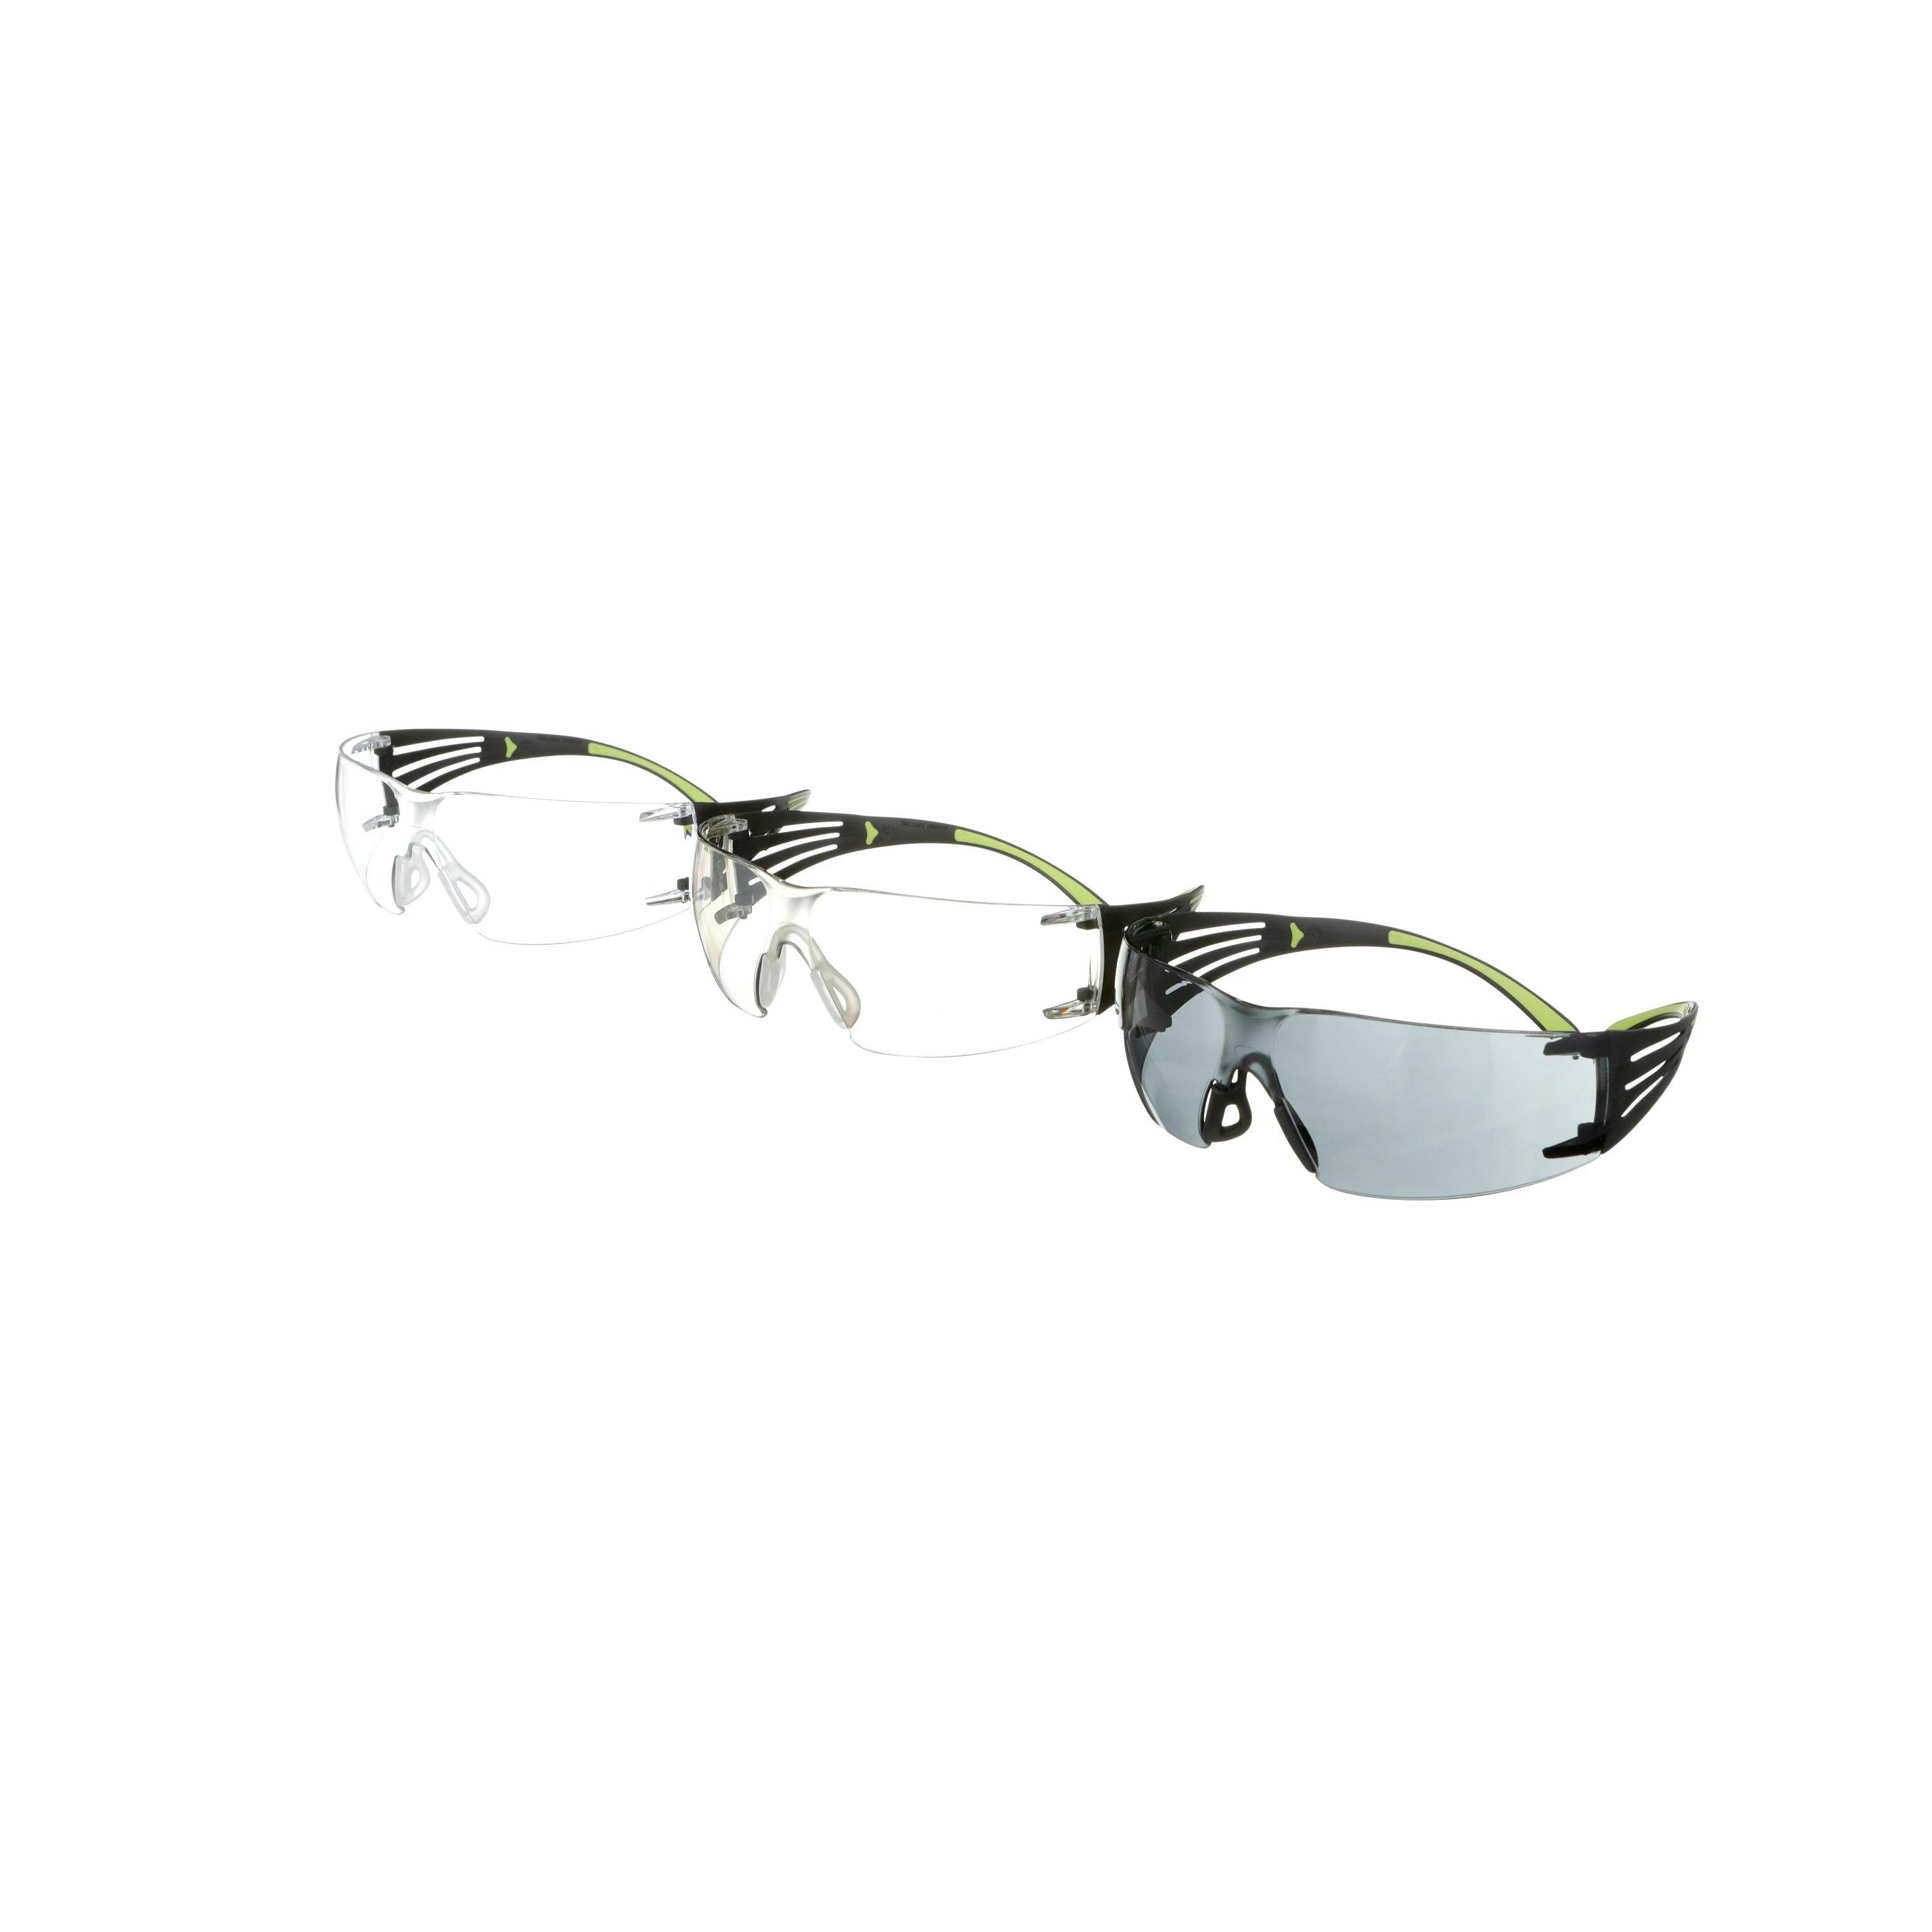 3M™ SecureFit™ 400 Safety Eyewear SF400-W-3PK-PS, 3 Pack: Clear + Mirror + Gray Lenses, Anti Fog_0